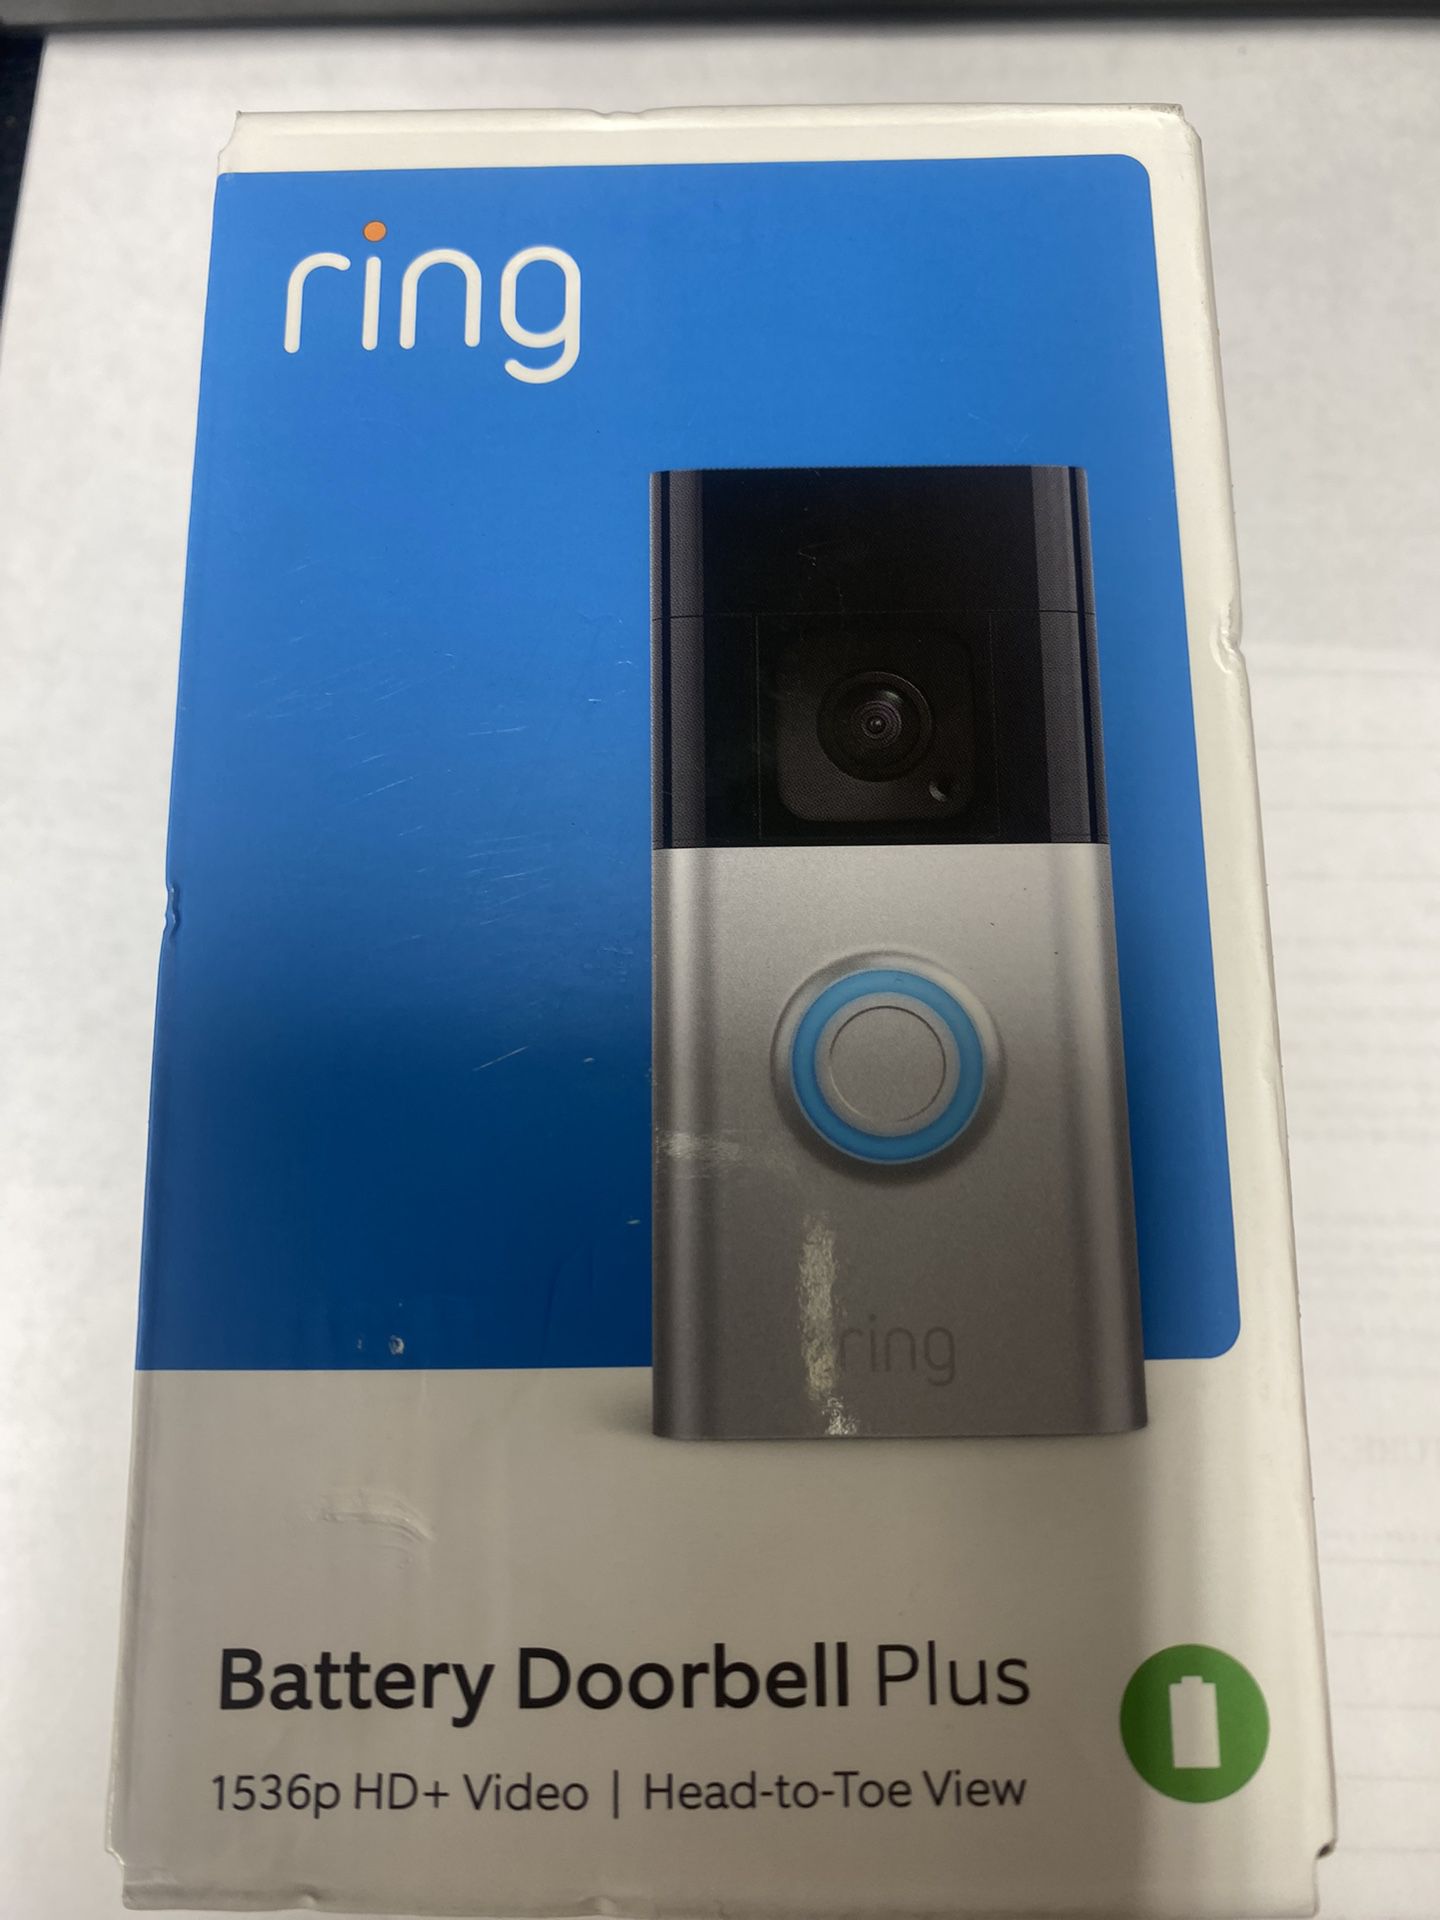 Ring Battery Doorbell Plus $119 Plus Tax At Best Buy